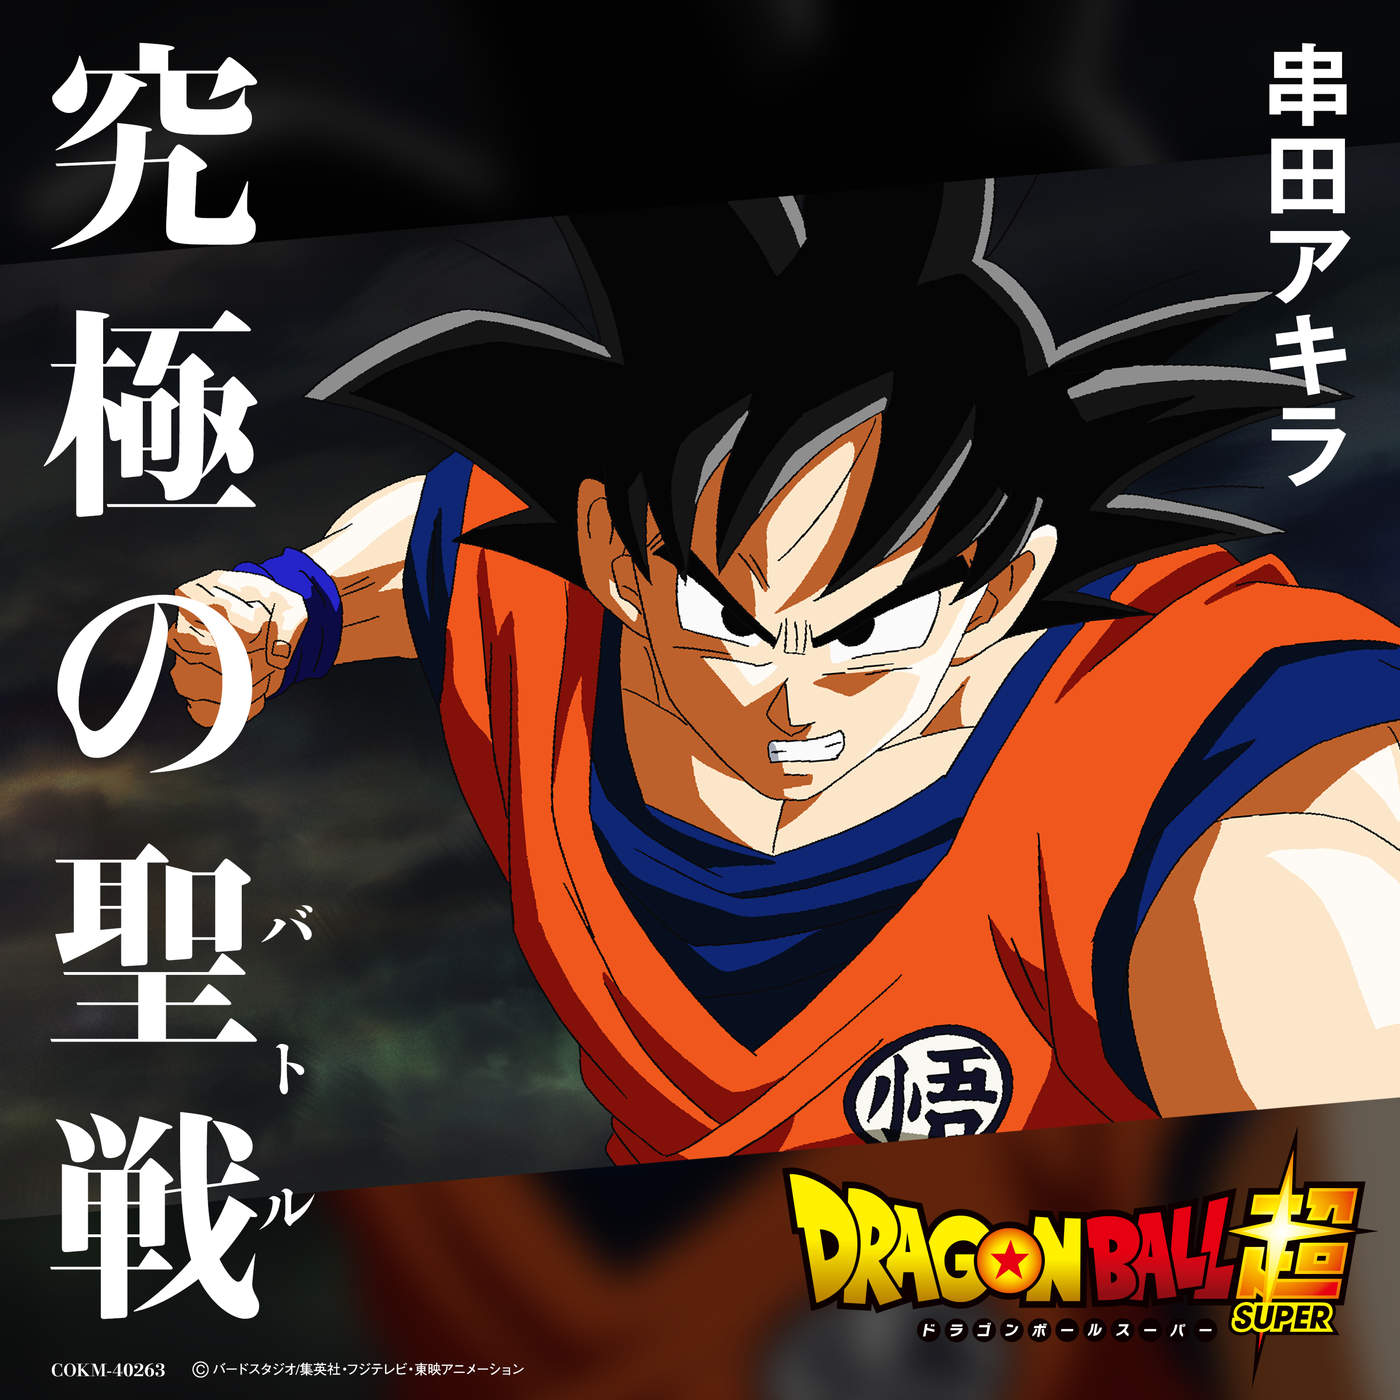 [MP3] [Single] 串田アキラ (Akira Kushida) - 究極の聖戦 (Kyukyoku no Battle) [Dragon Ball Super Insert Song] [EPs 110, 116] [14.02.2018].zip